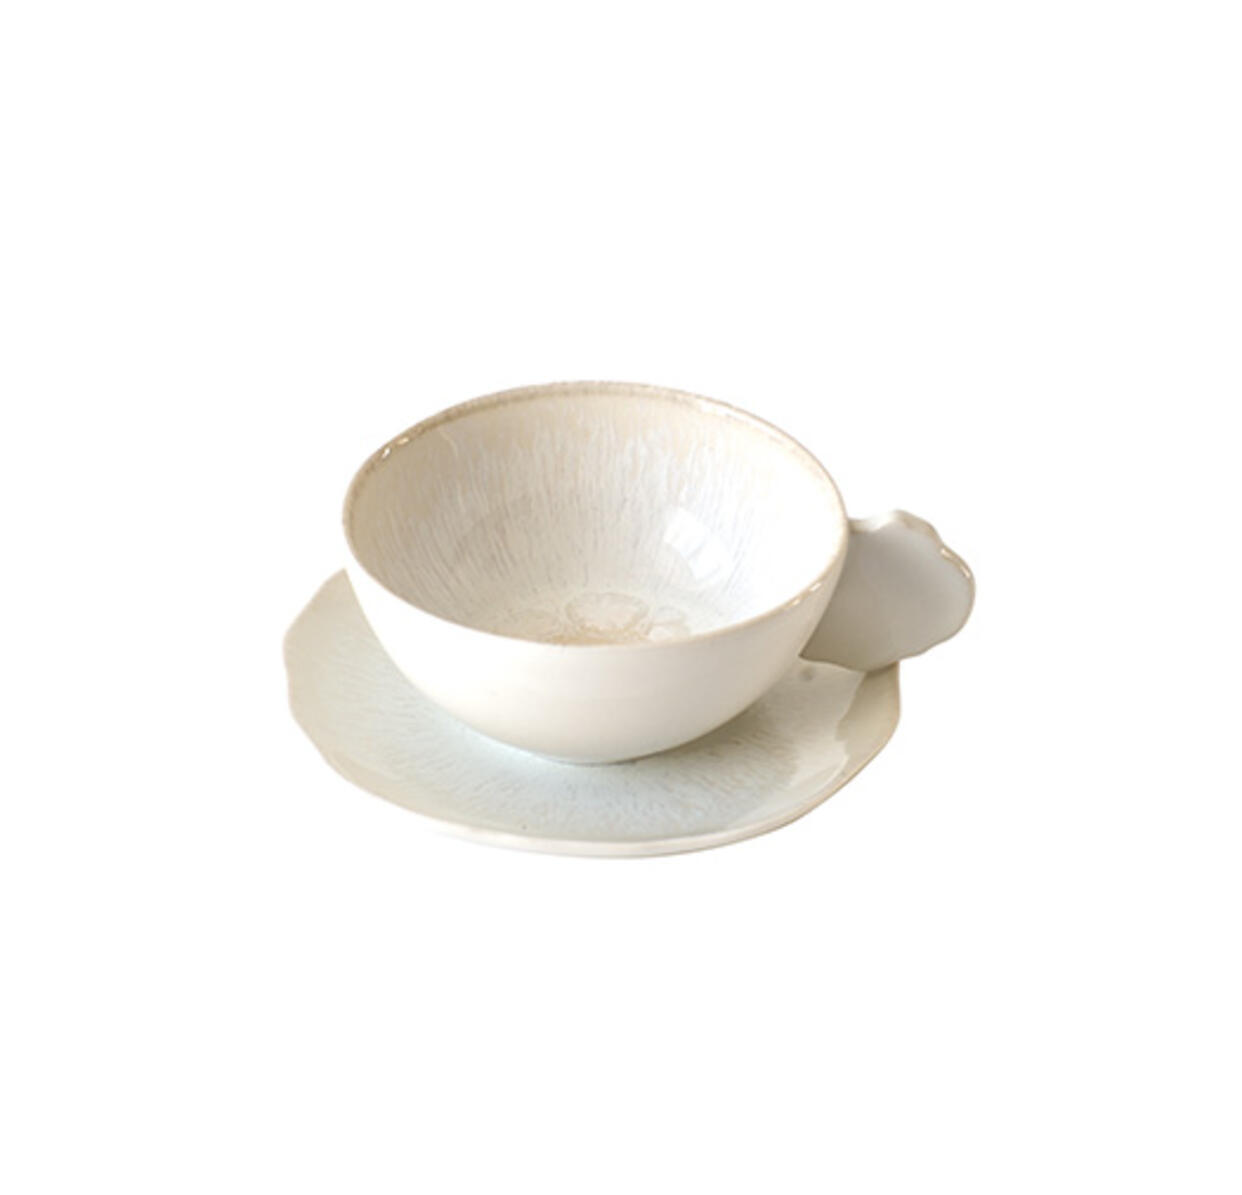 cup & saucer - s plume perle ceramic manufacturer